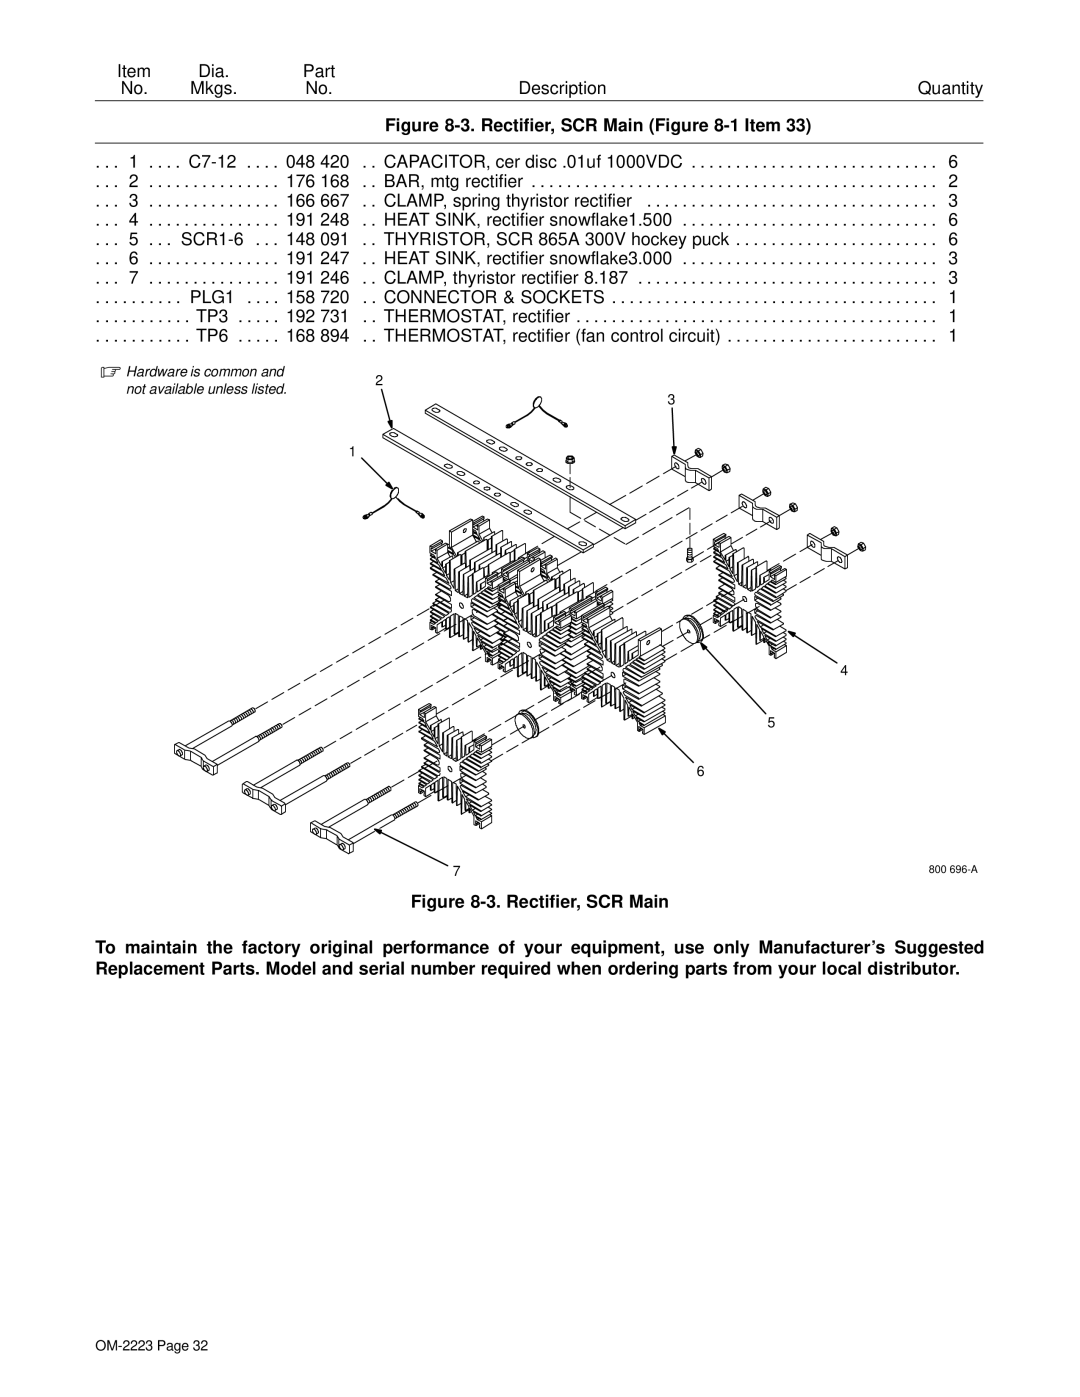 Miller Electric 1250, 1000 manual Rectifier, SCR Main -1Item 